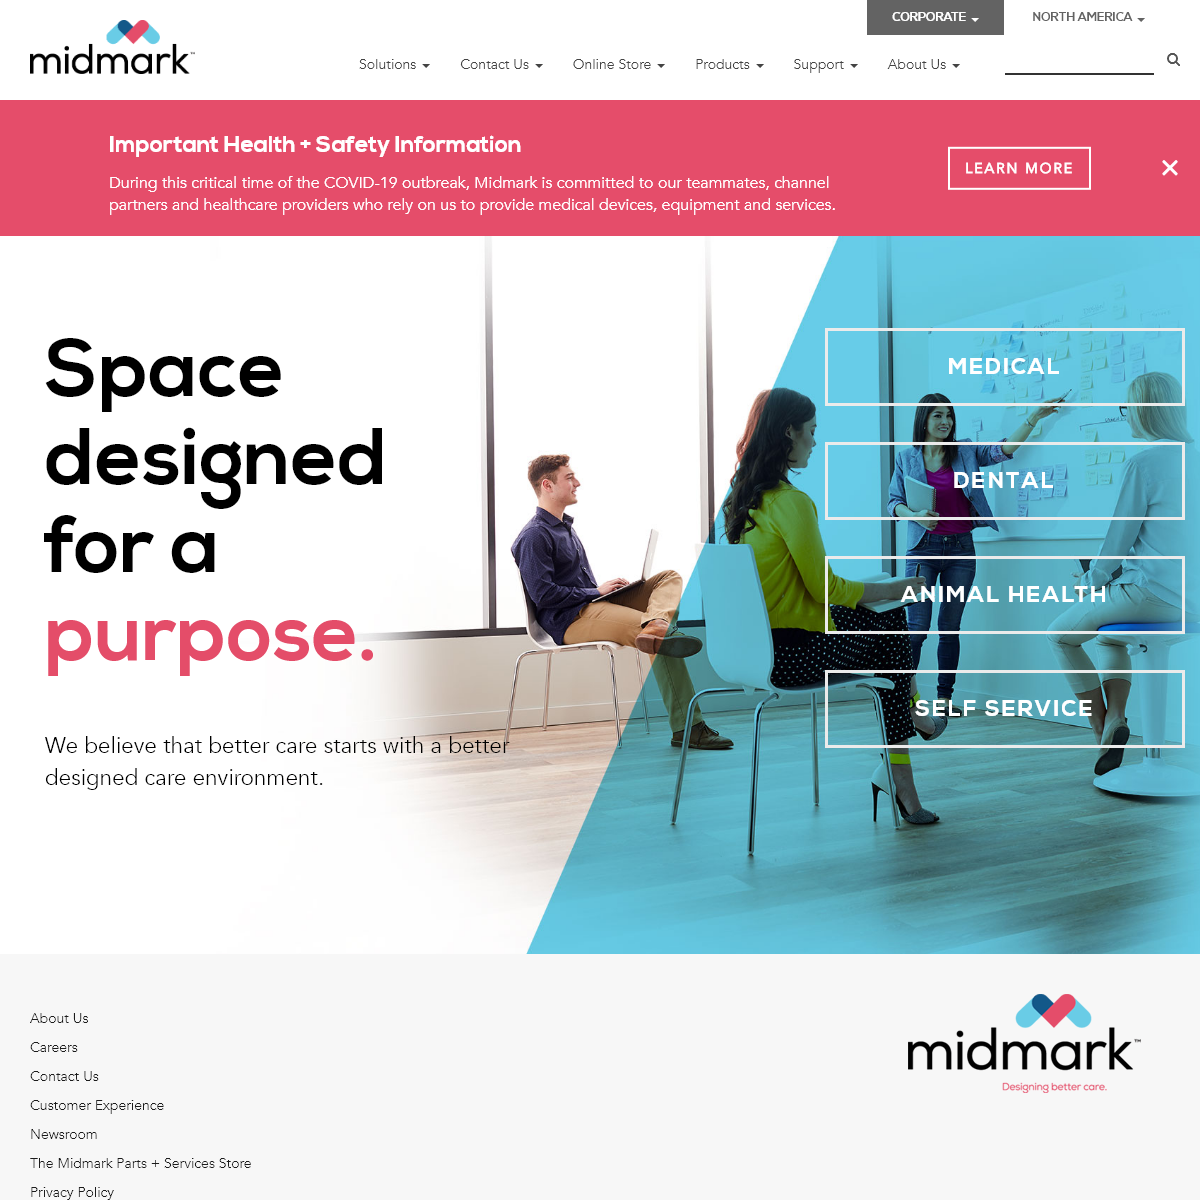 A complete backup of midmark.com